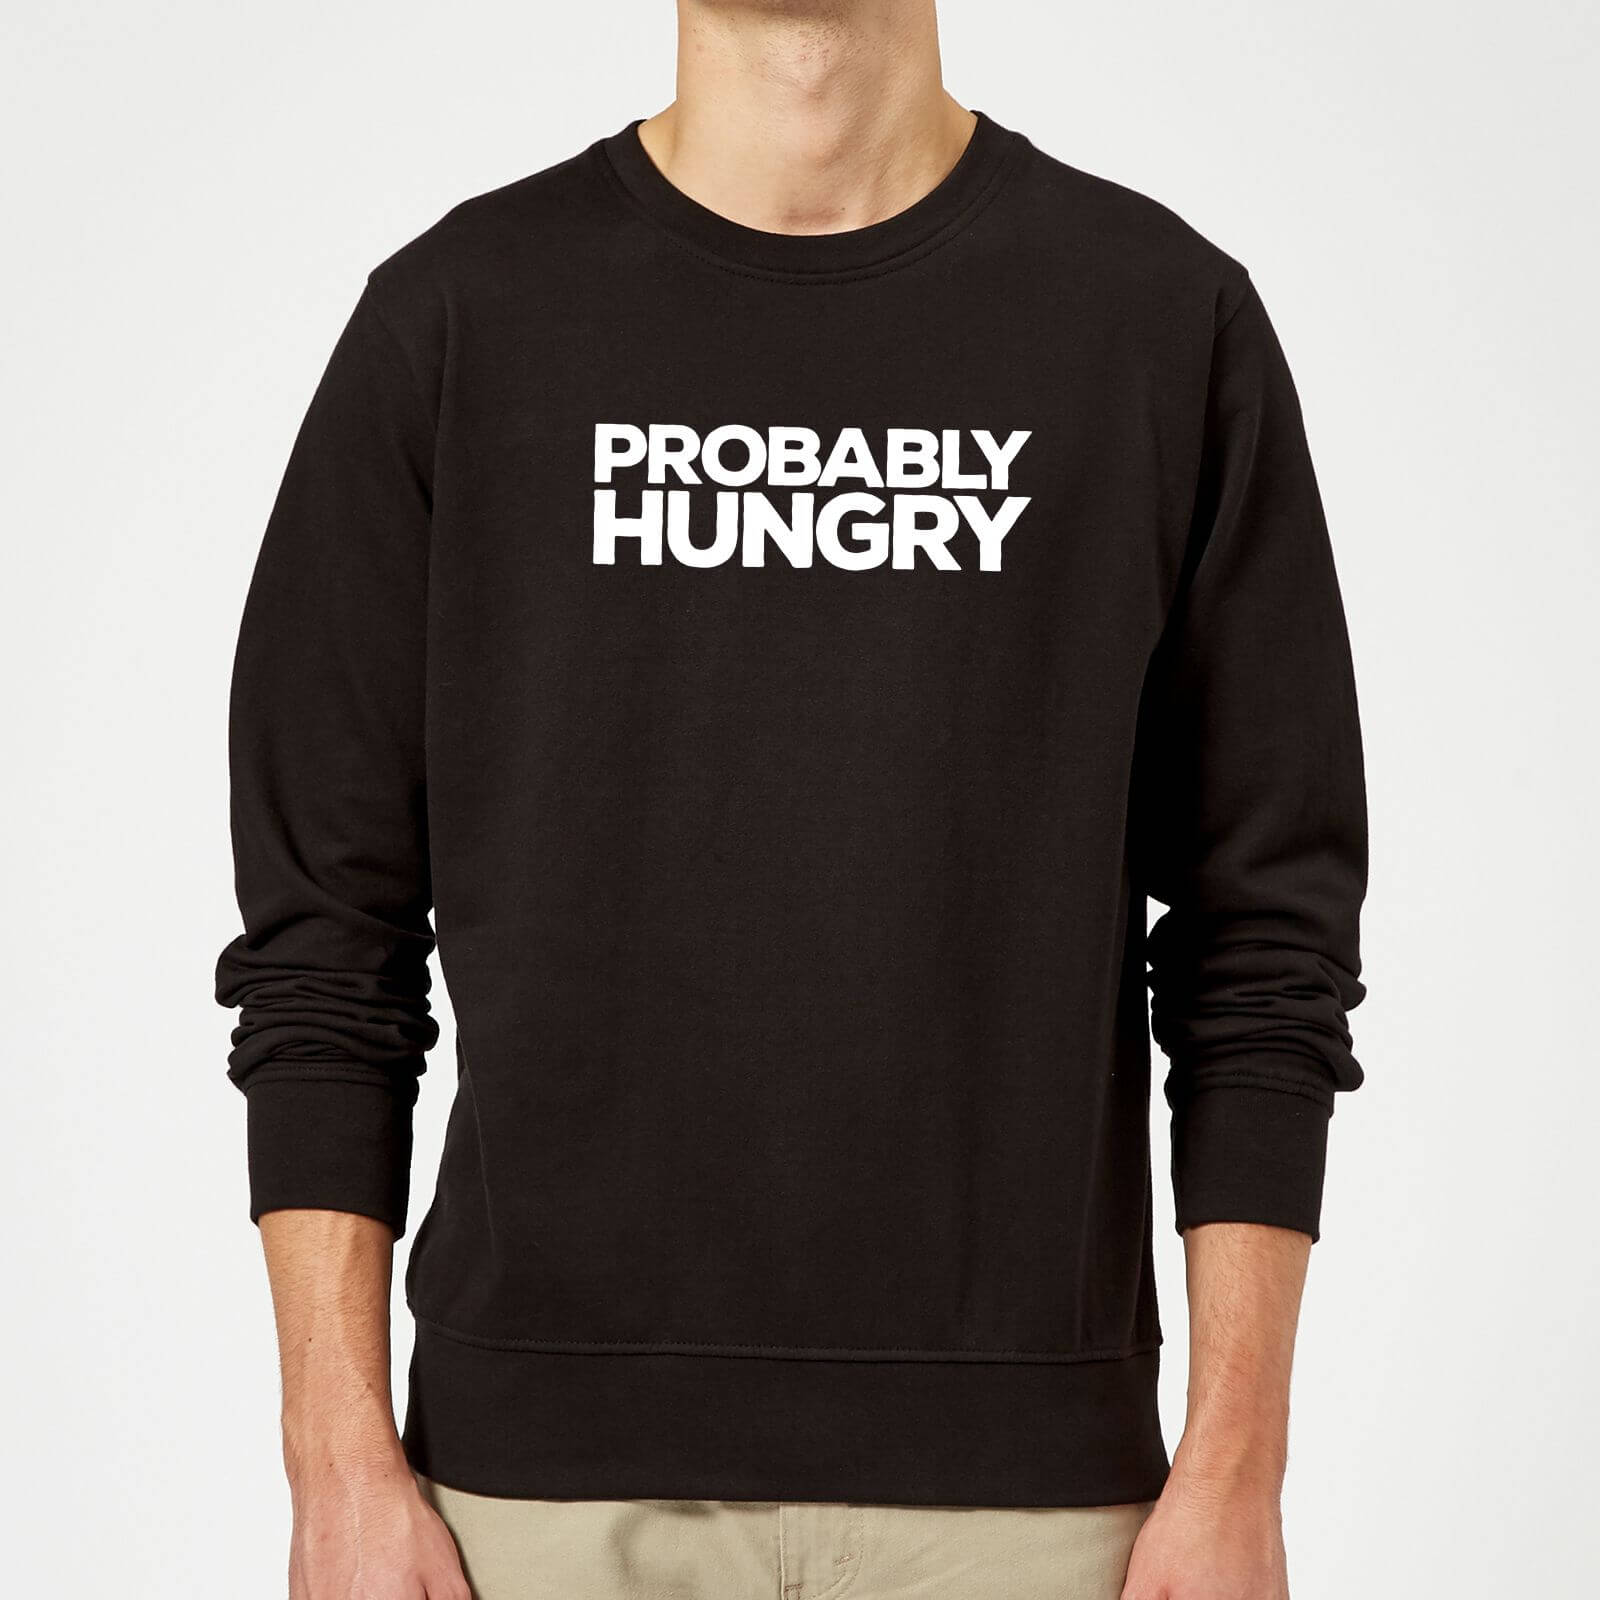 Probably Hungry Slogan Sweatshirt - Black - S - Black